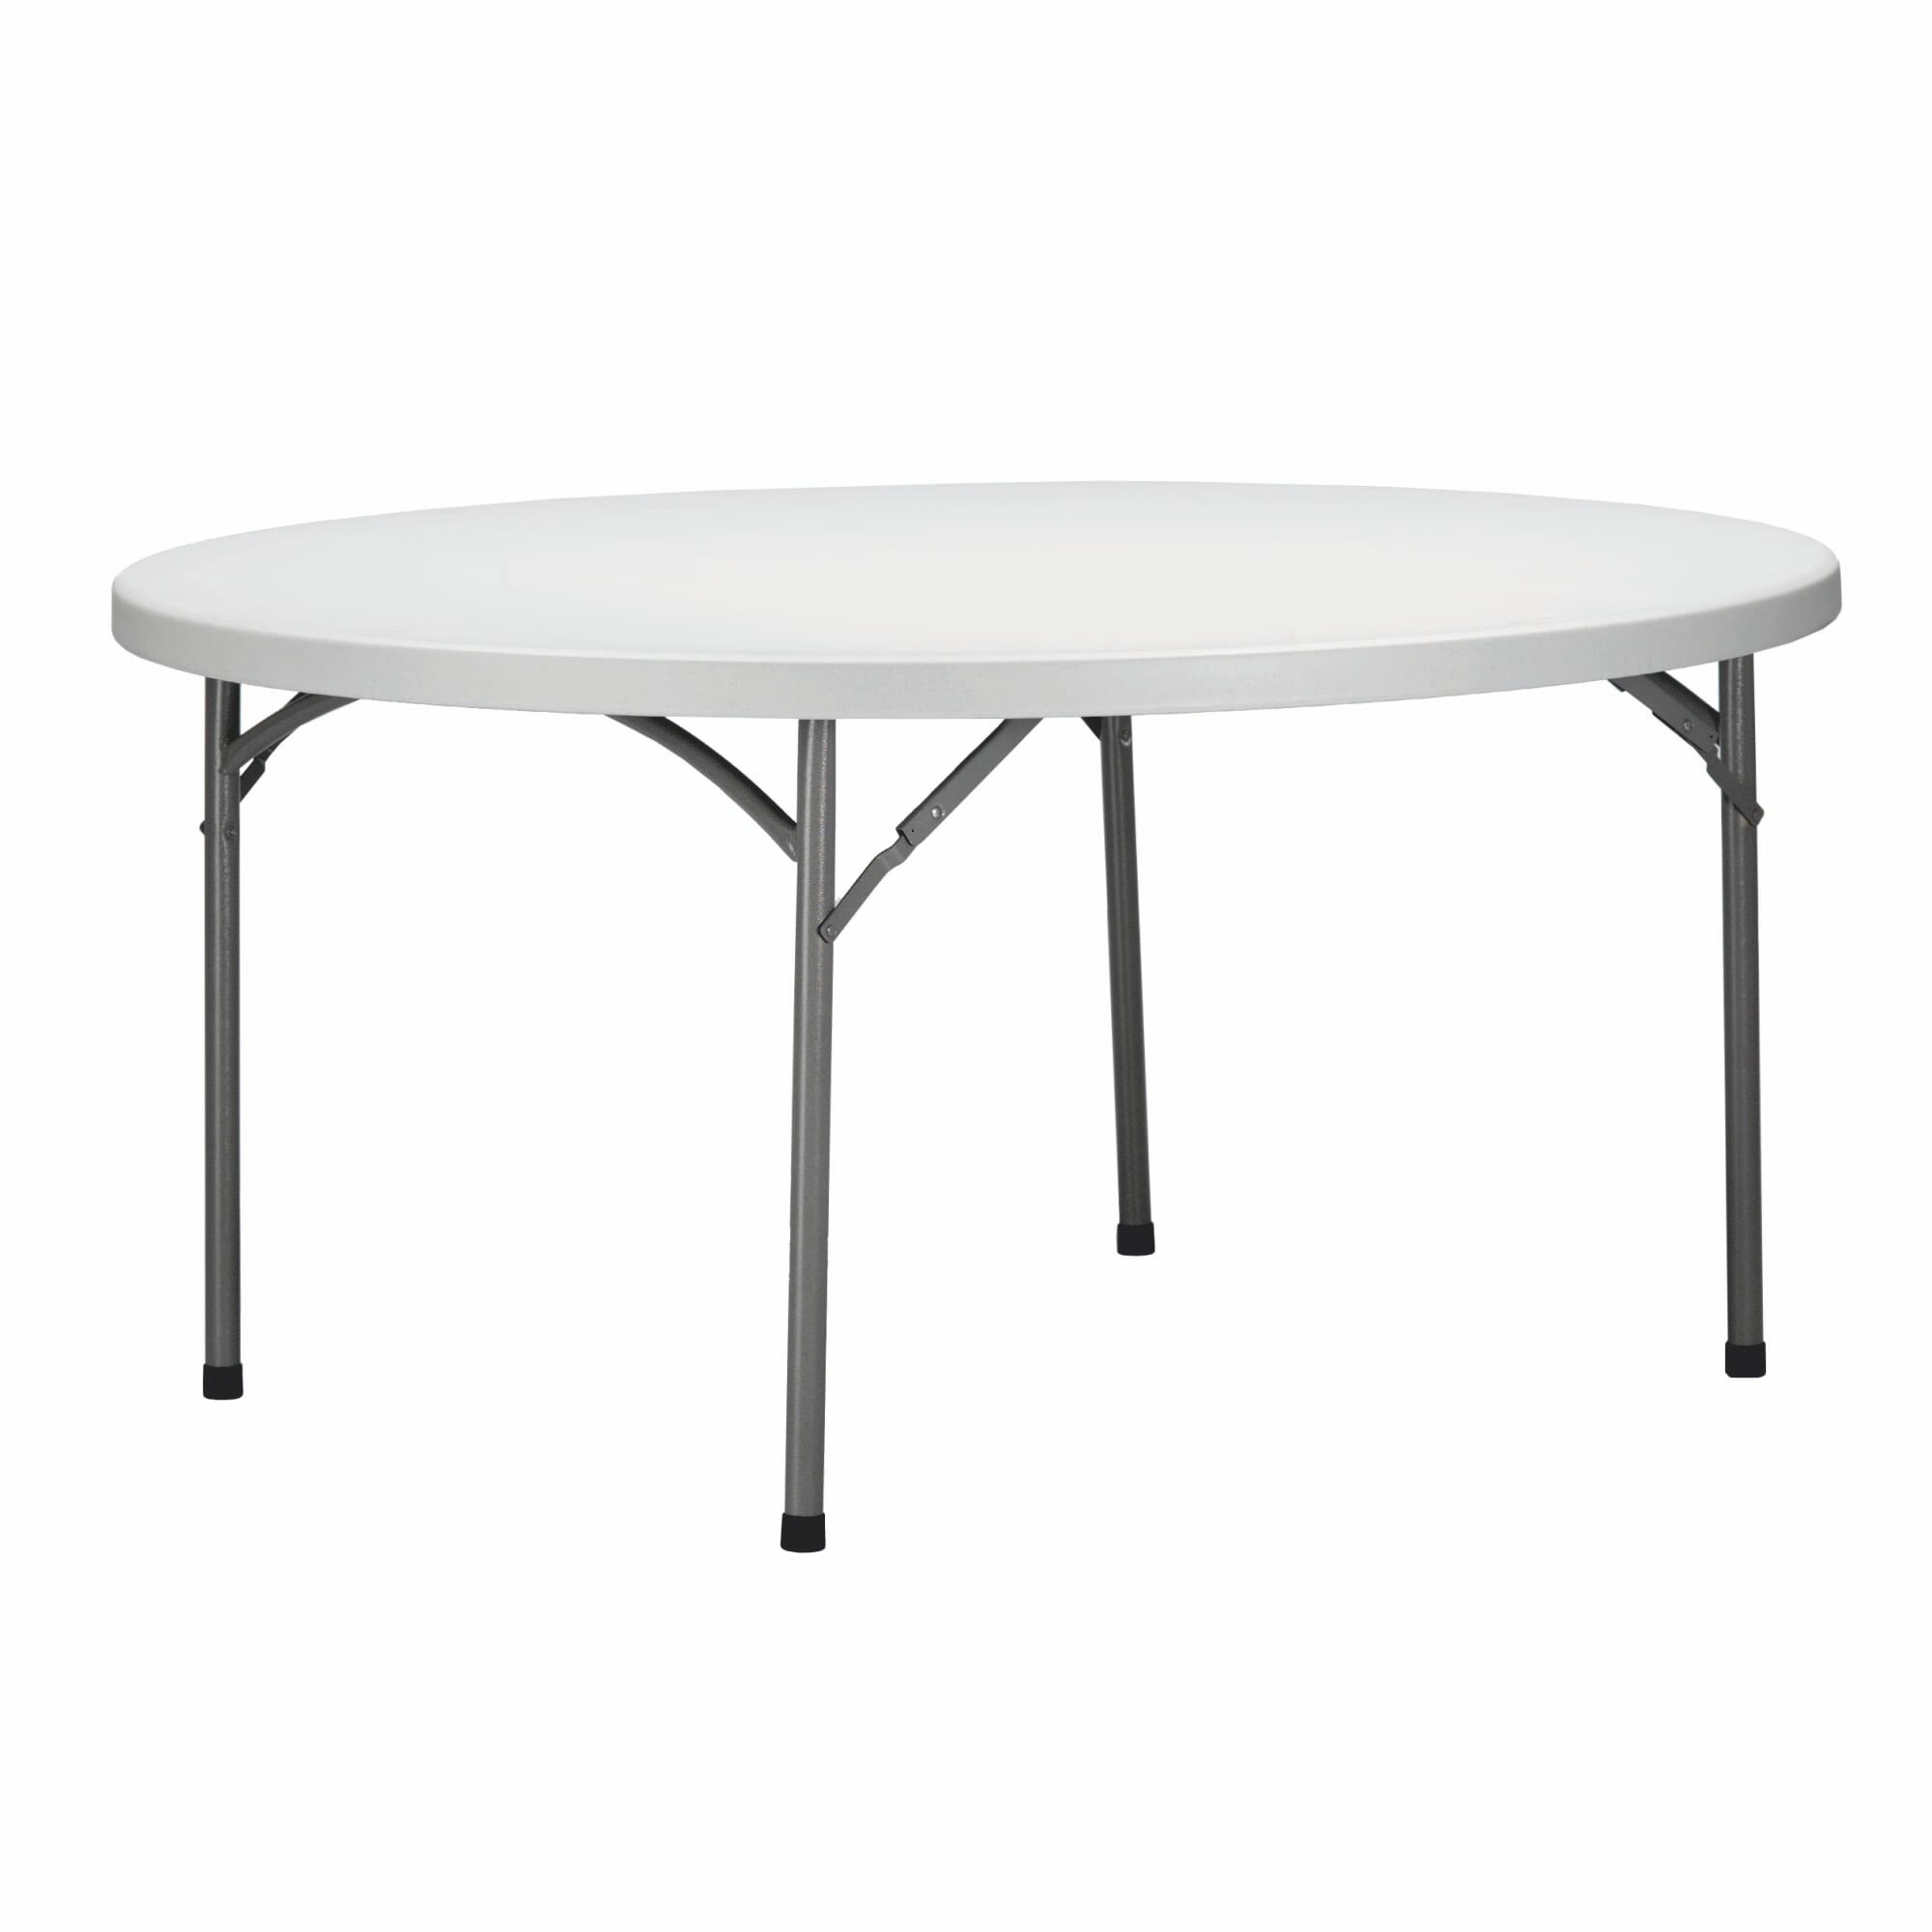 Garbar Verdi Round folding table indoors, outdoors Ø150